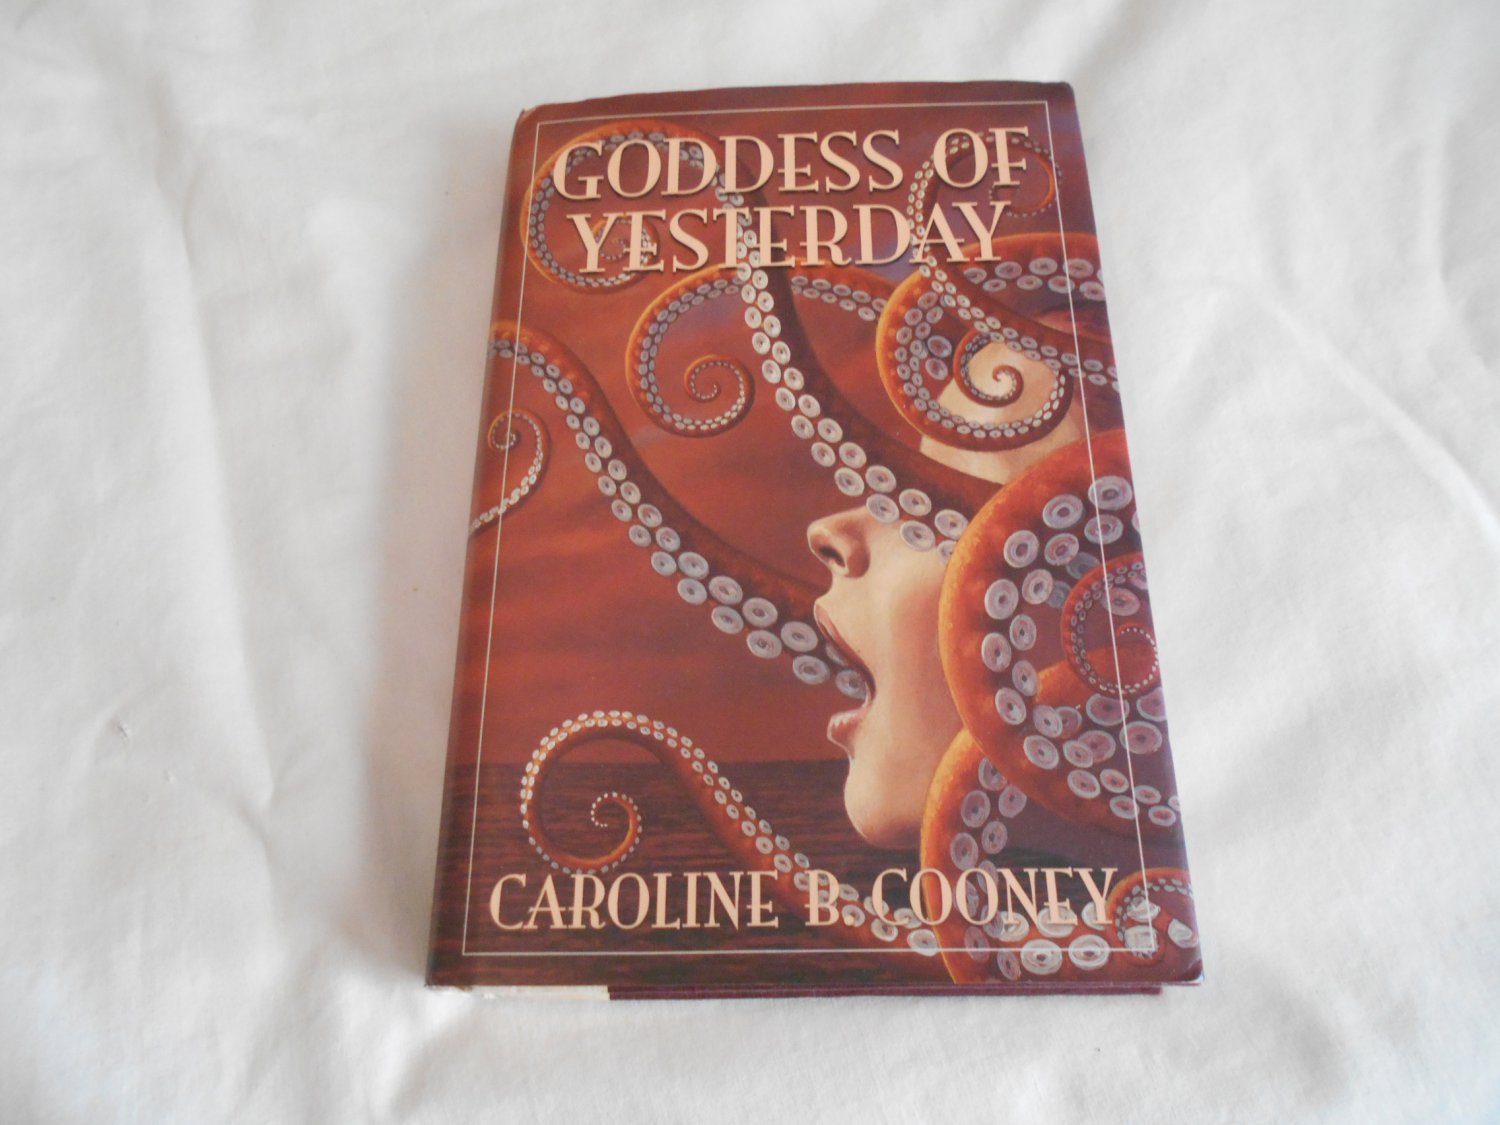 Goddess of Yesterday by Caroline B. Cooney